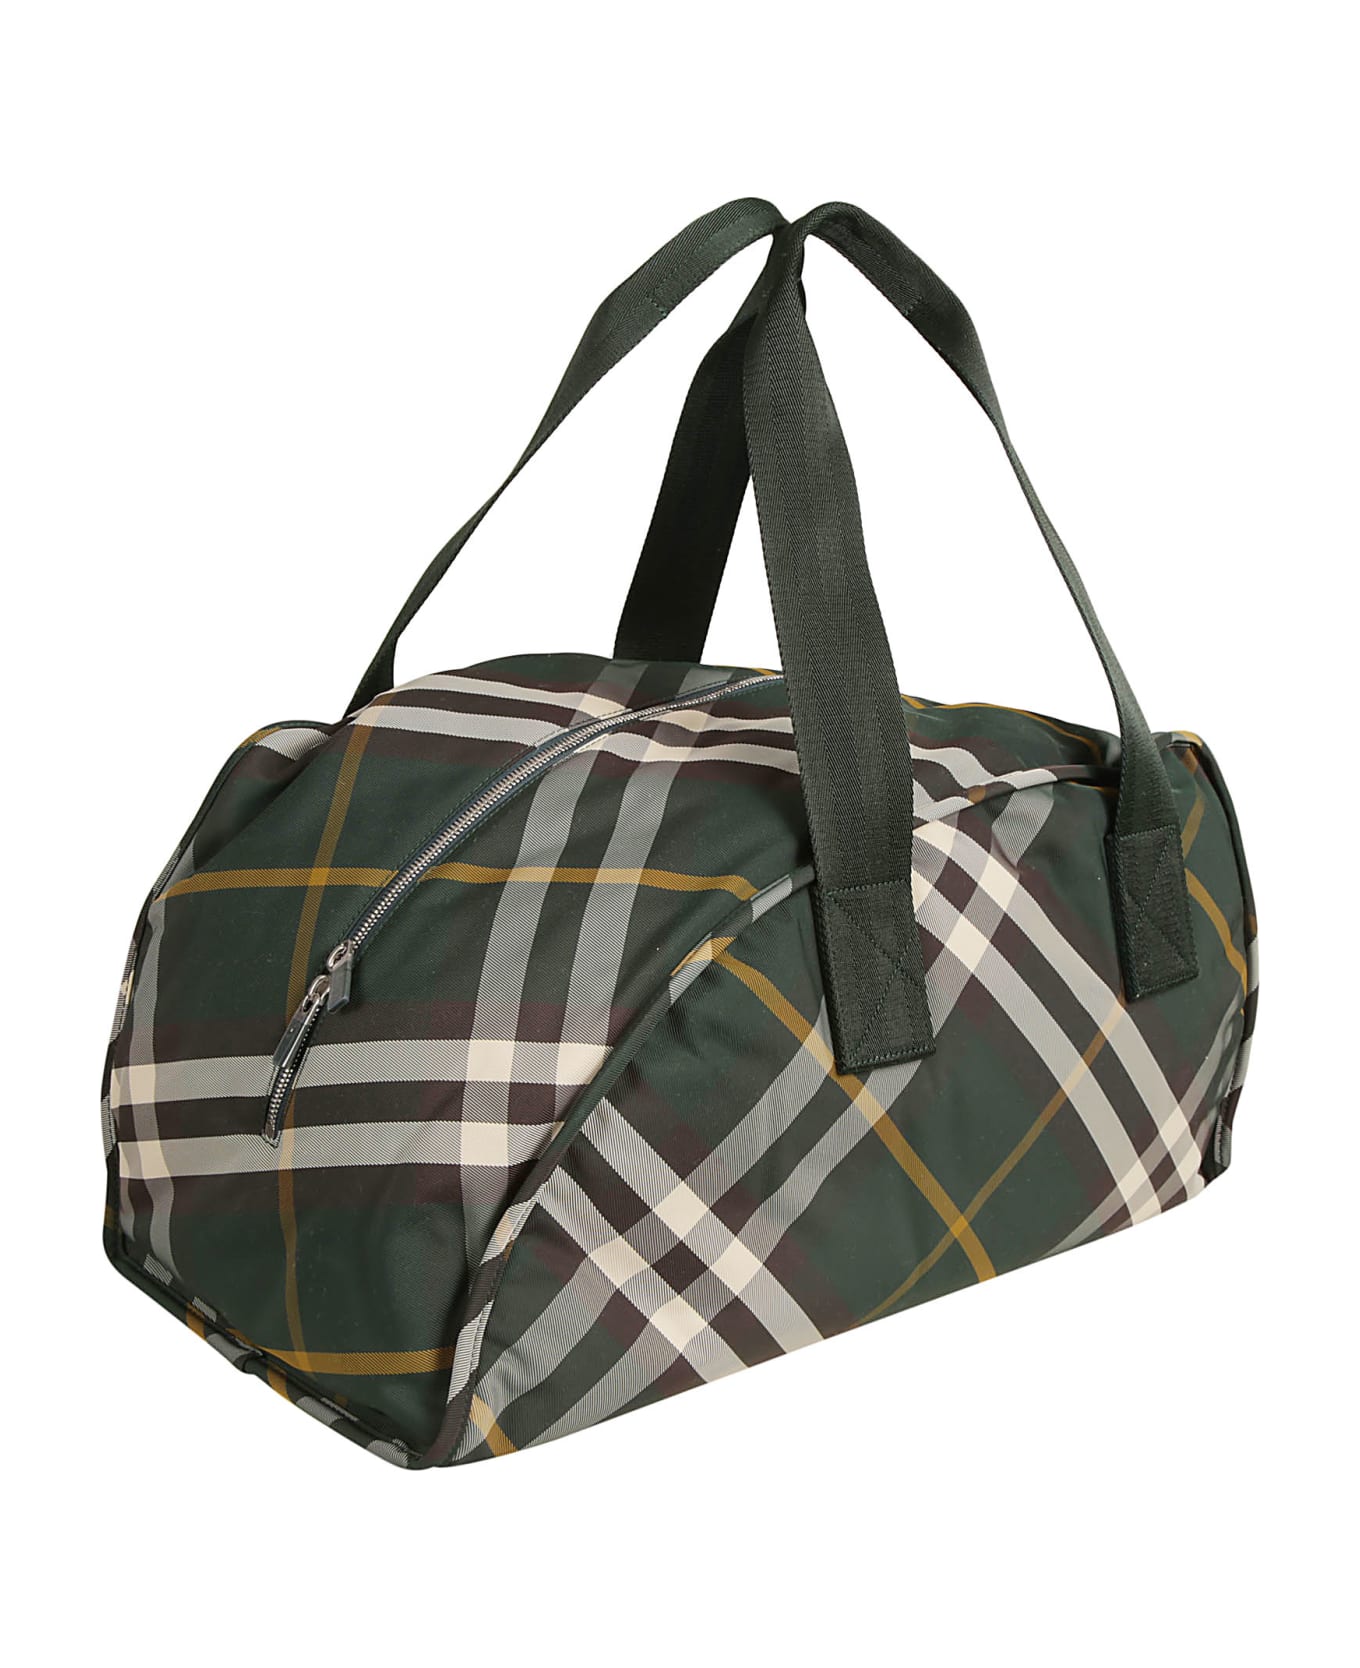 Burberry Shield Duffle Bag - Ivy トラベルバッグ